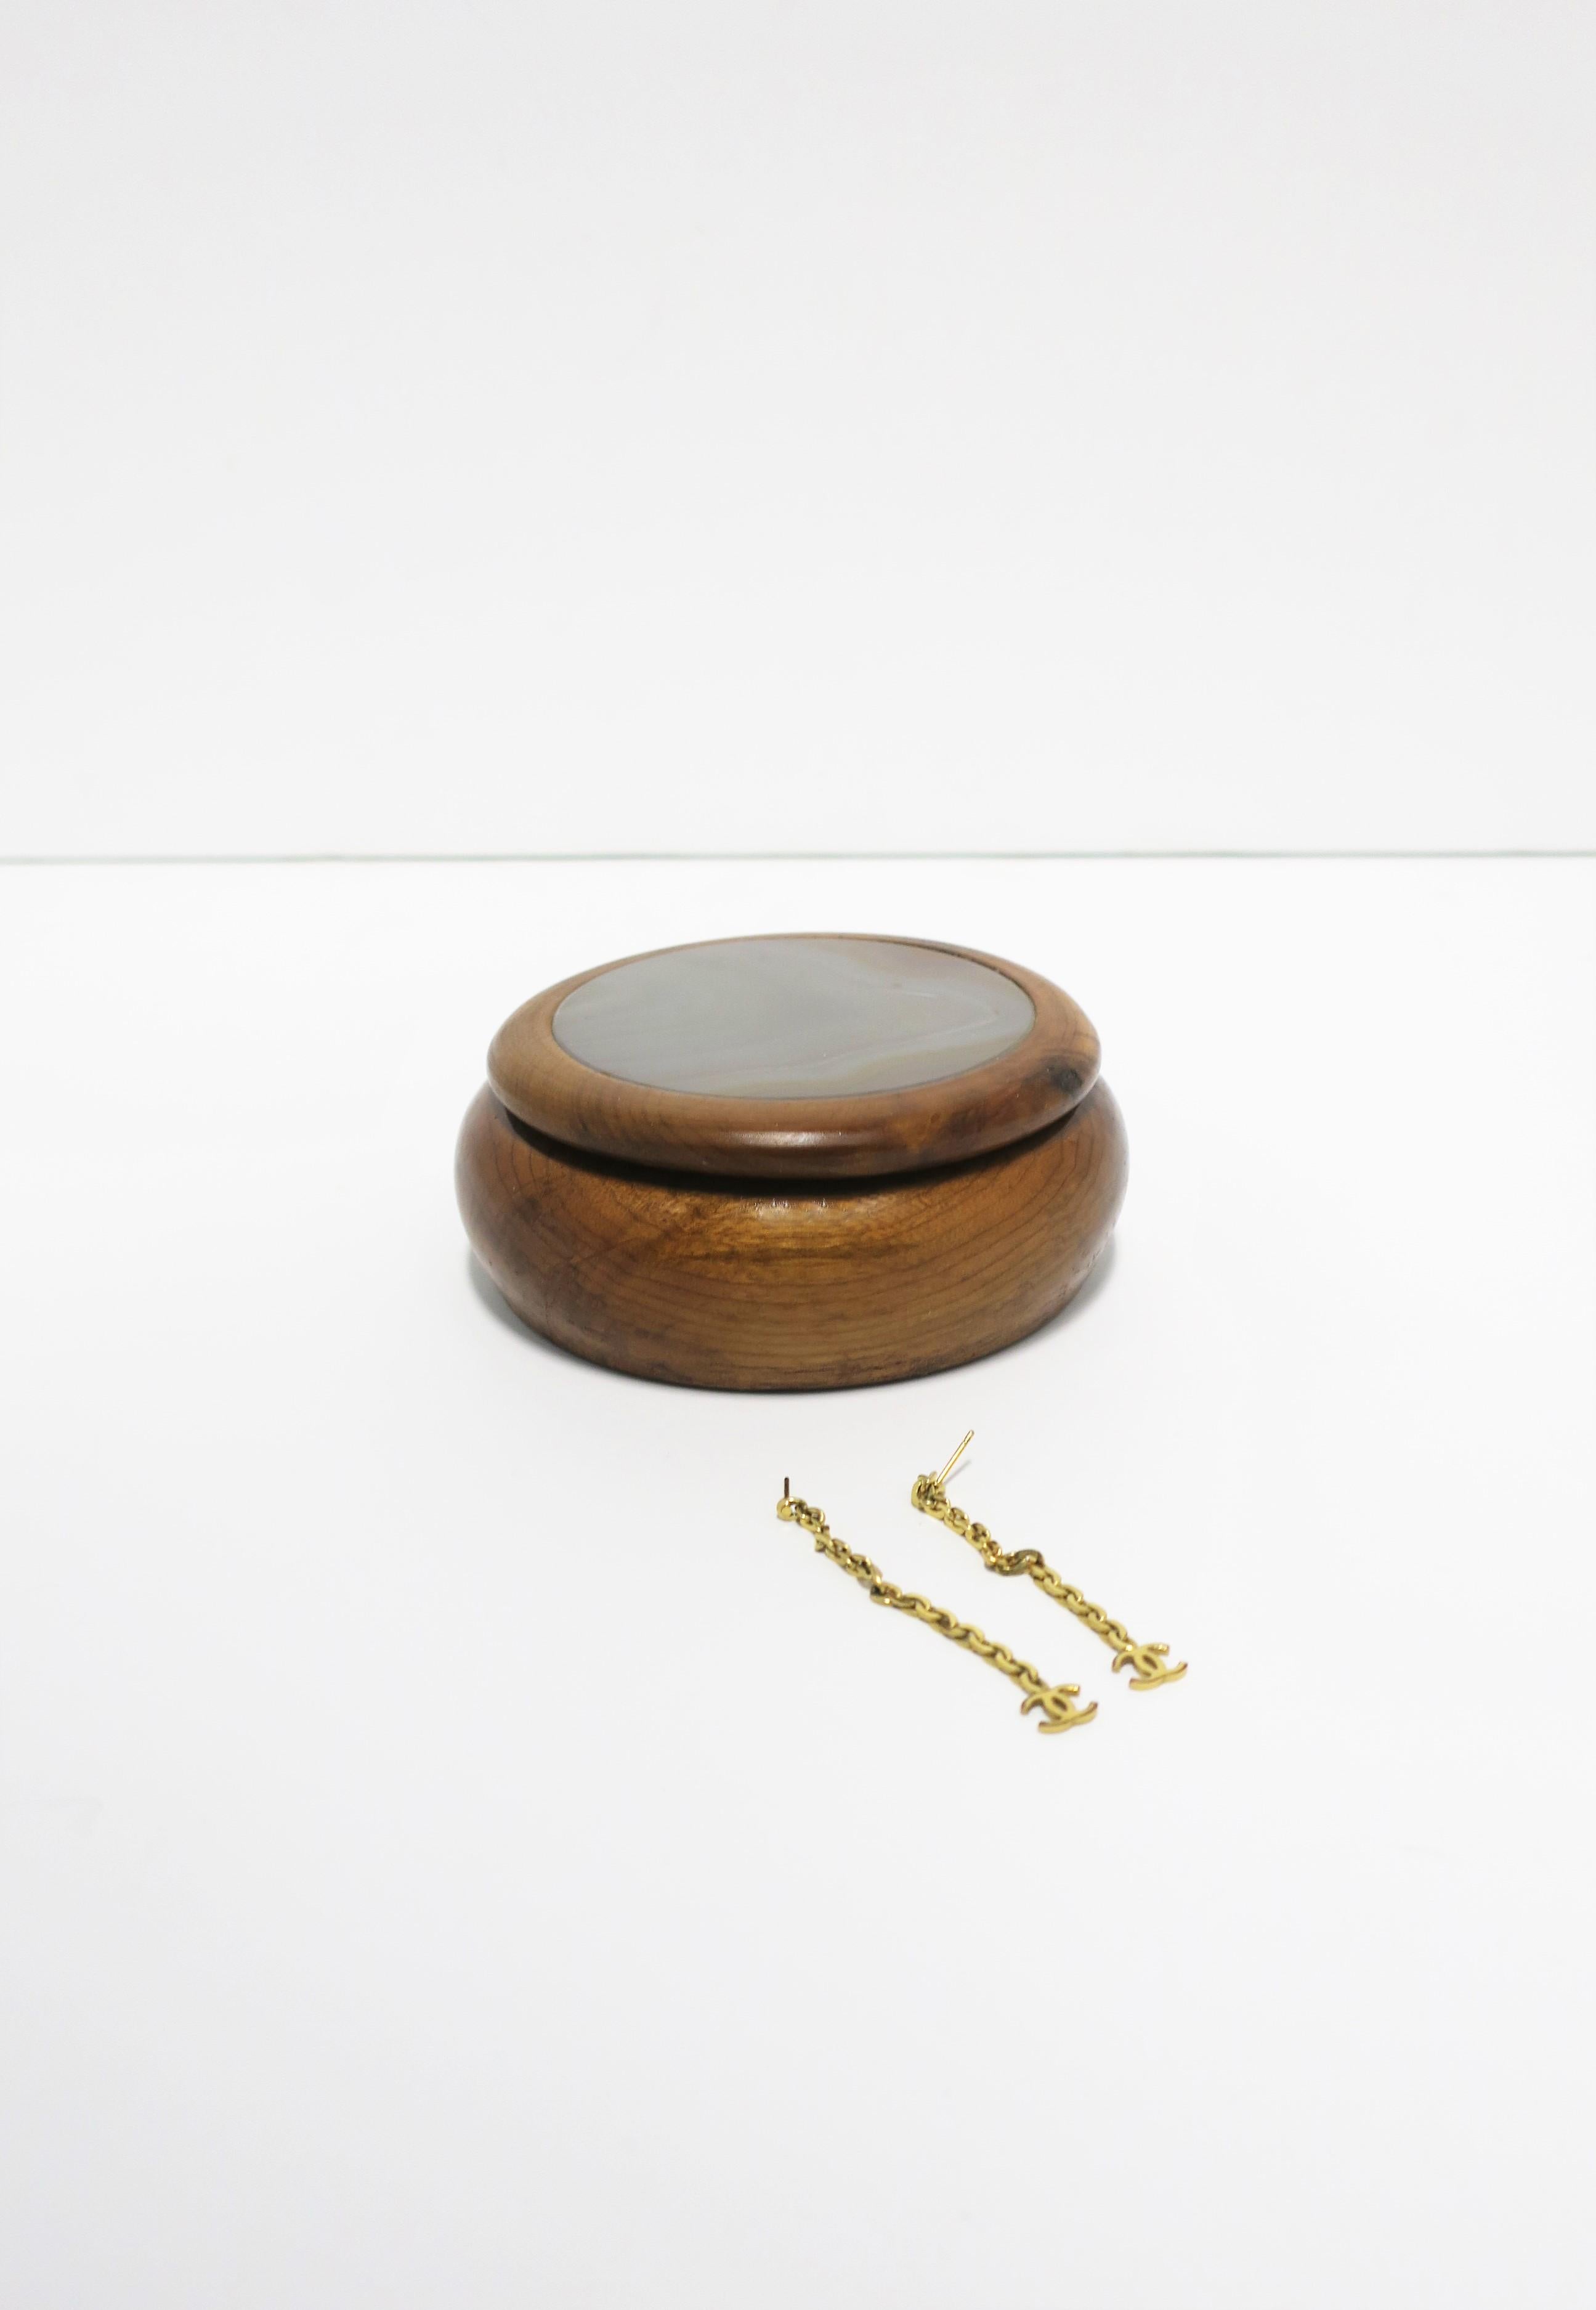 Brazilian Agate Onyx and Wood Round Jewelry or Trinket Box, Brazil, 1980s For Sale 1